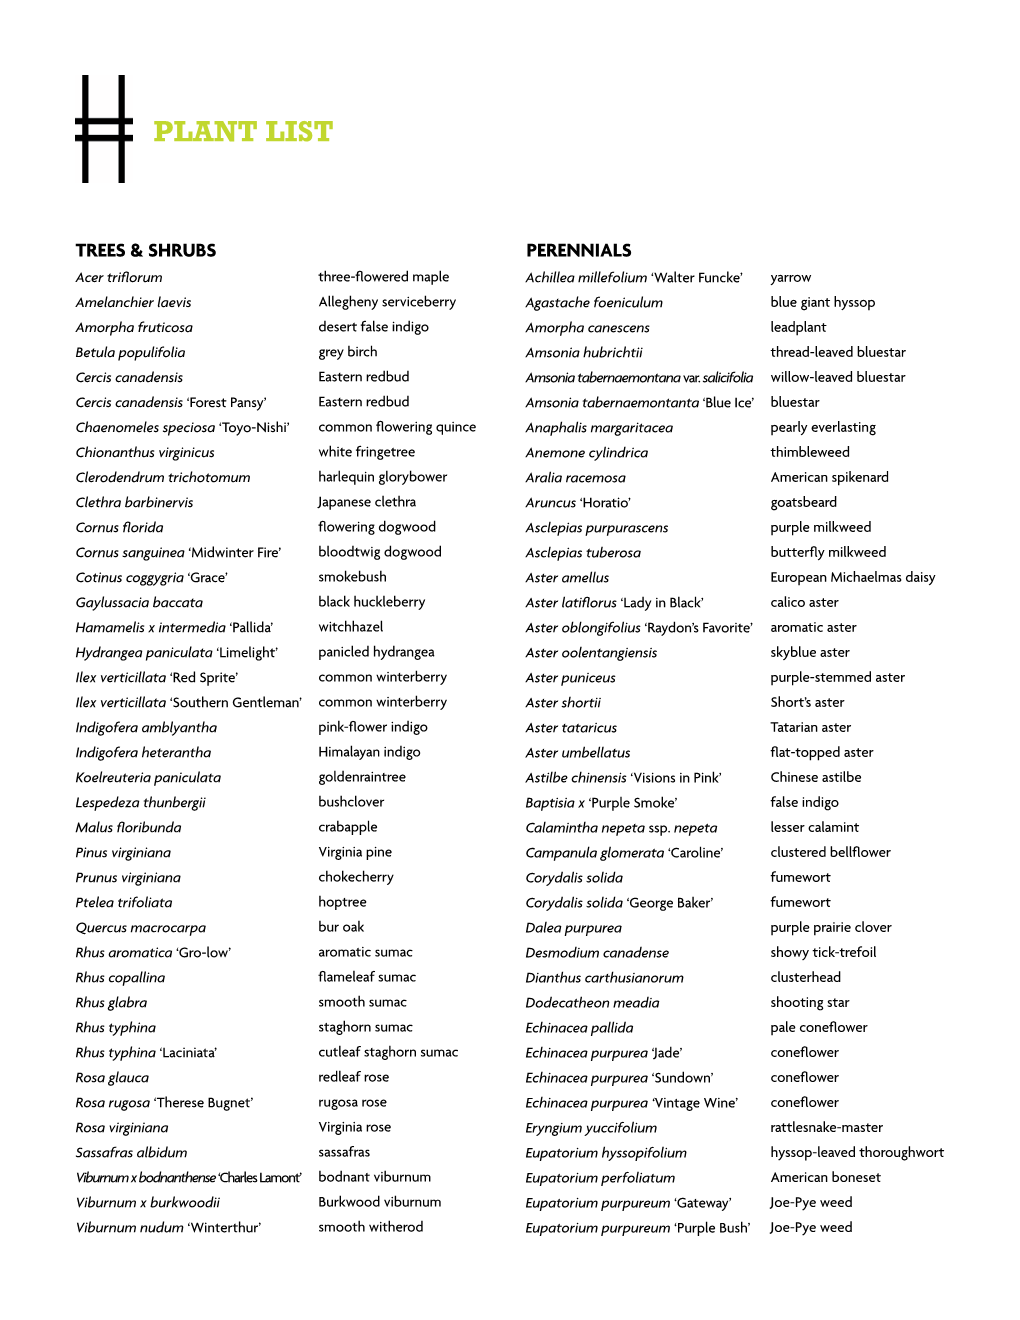 Complete Plant List